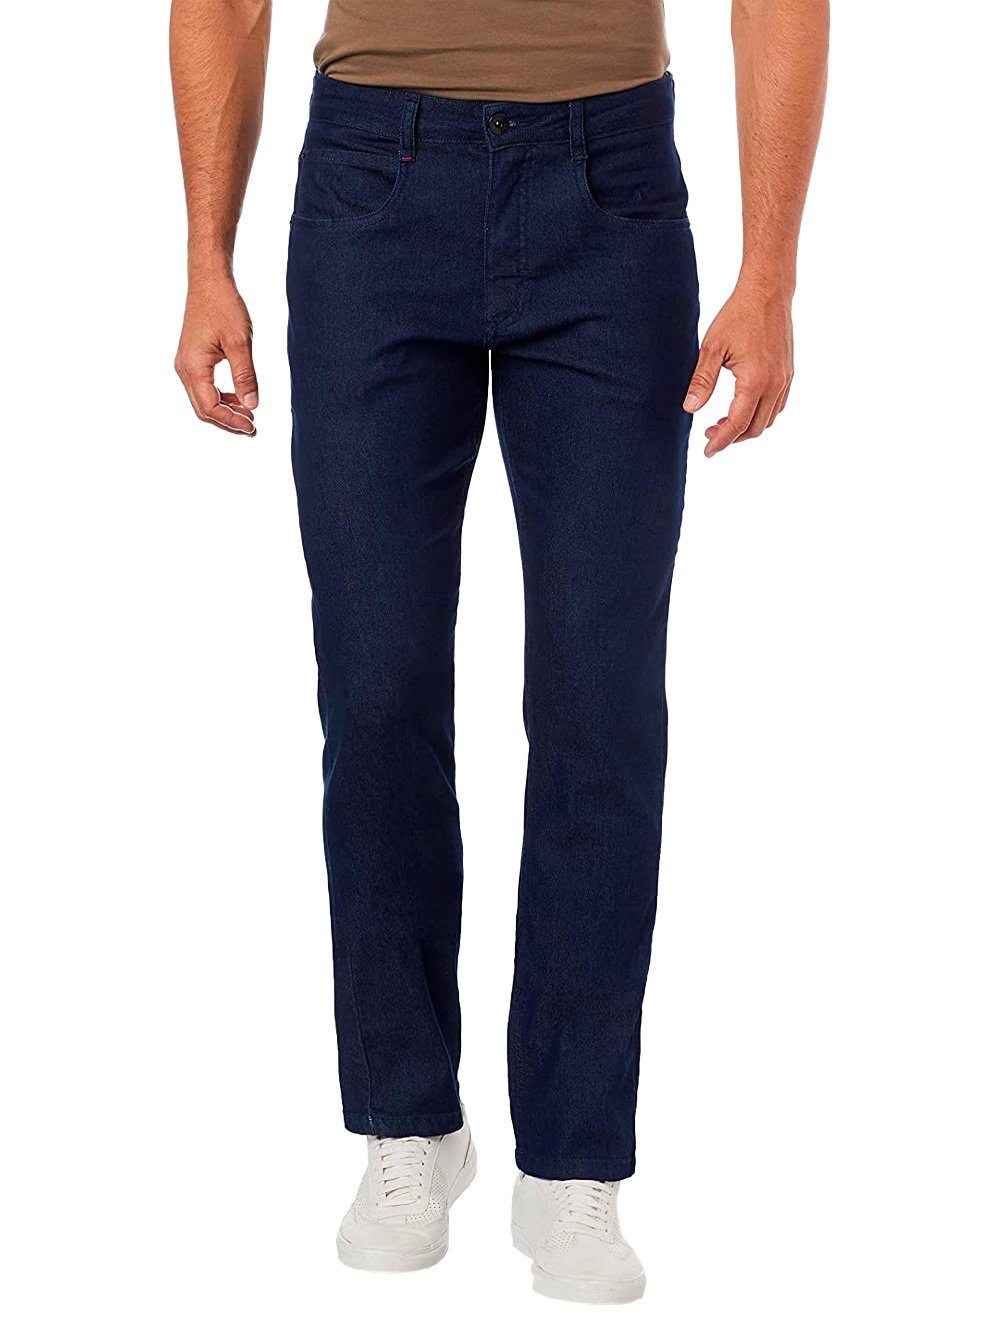 Calça Aramis Jeans Masculina Regular Basic 5 Pockets Dark